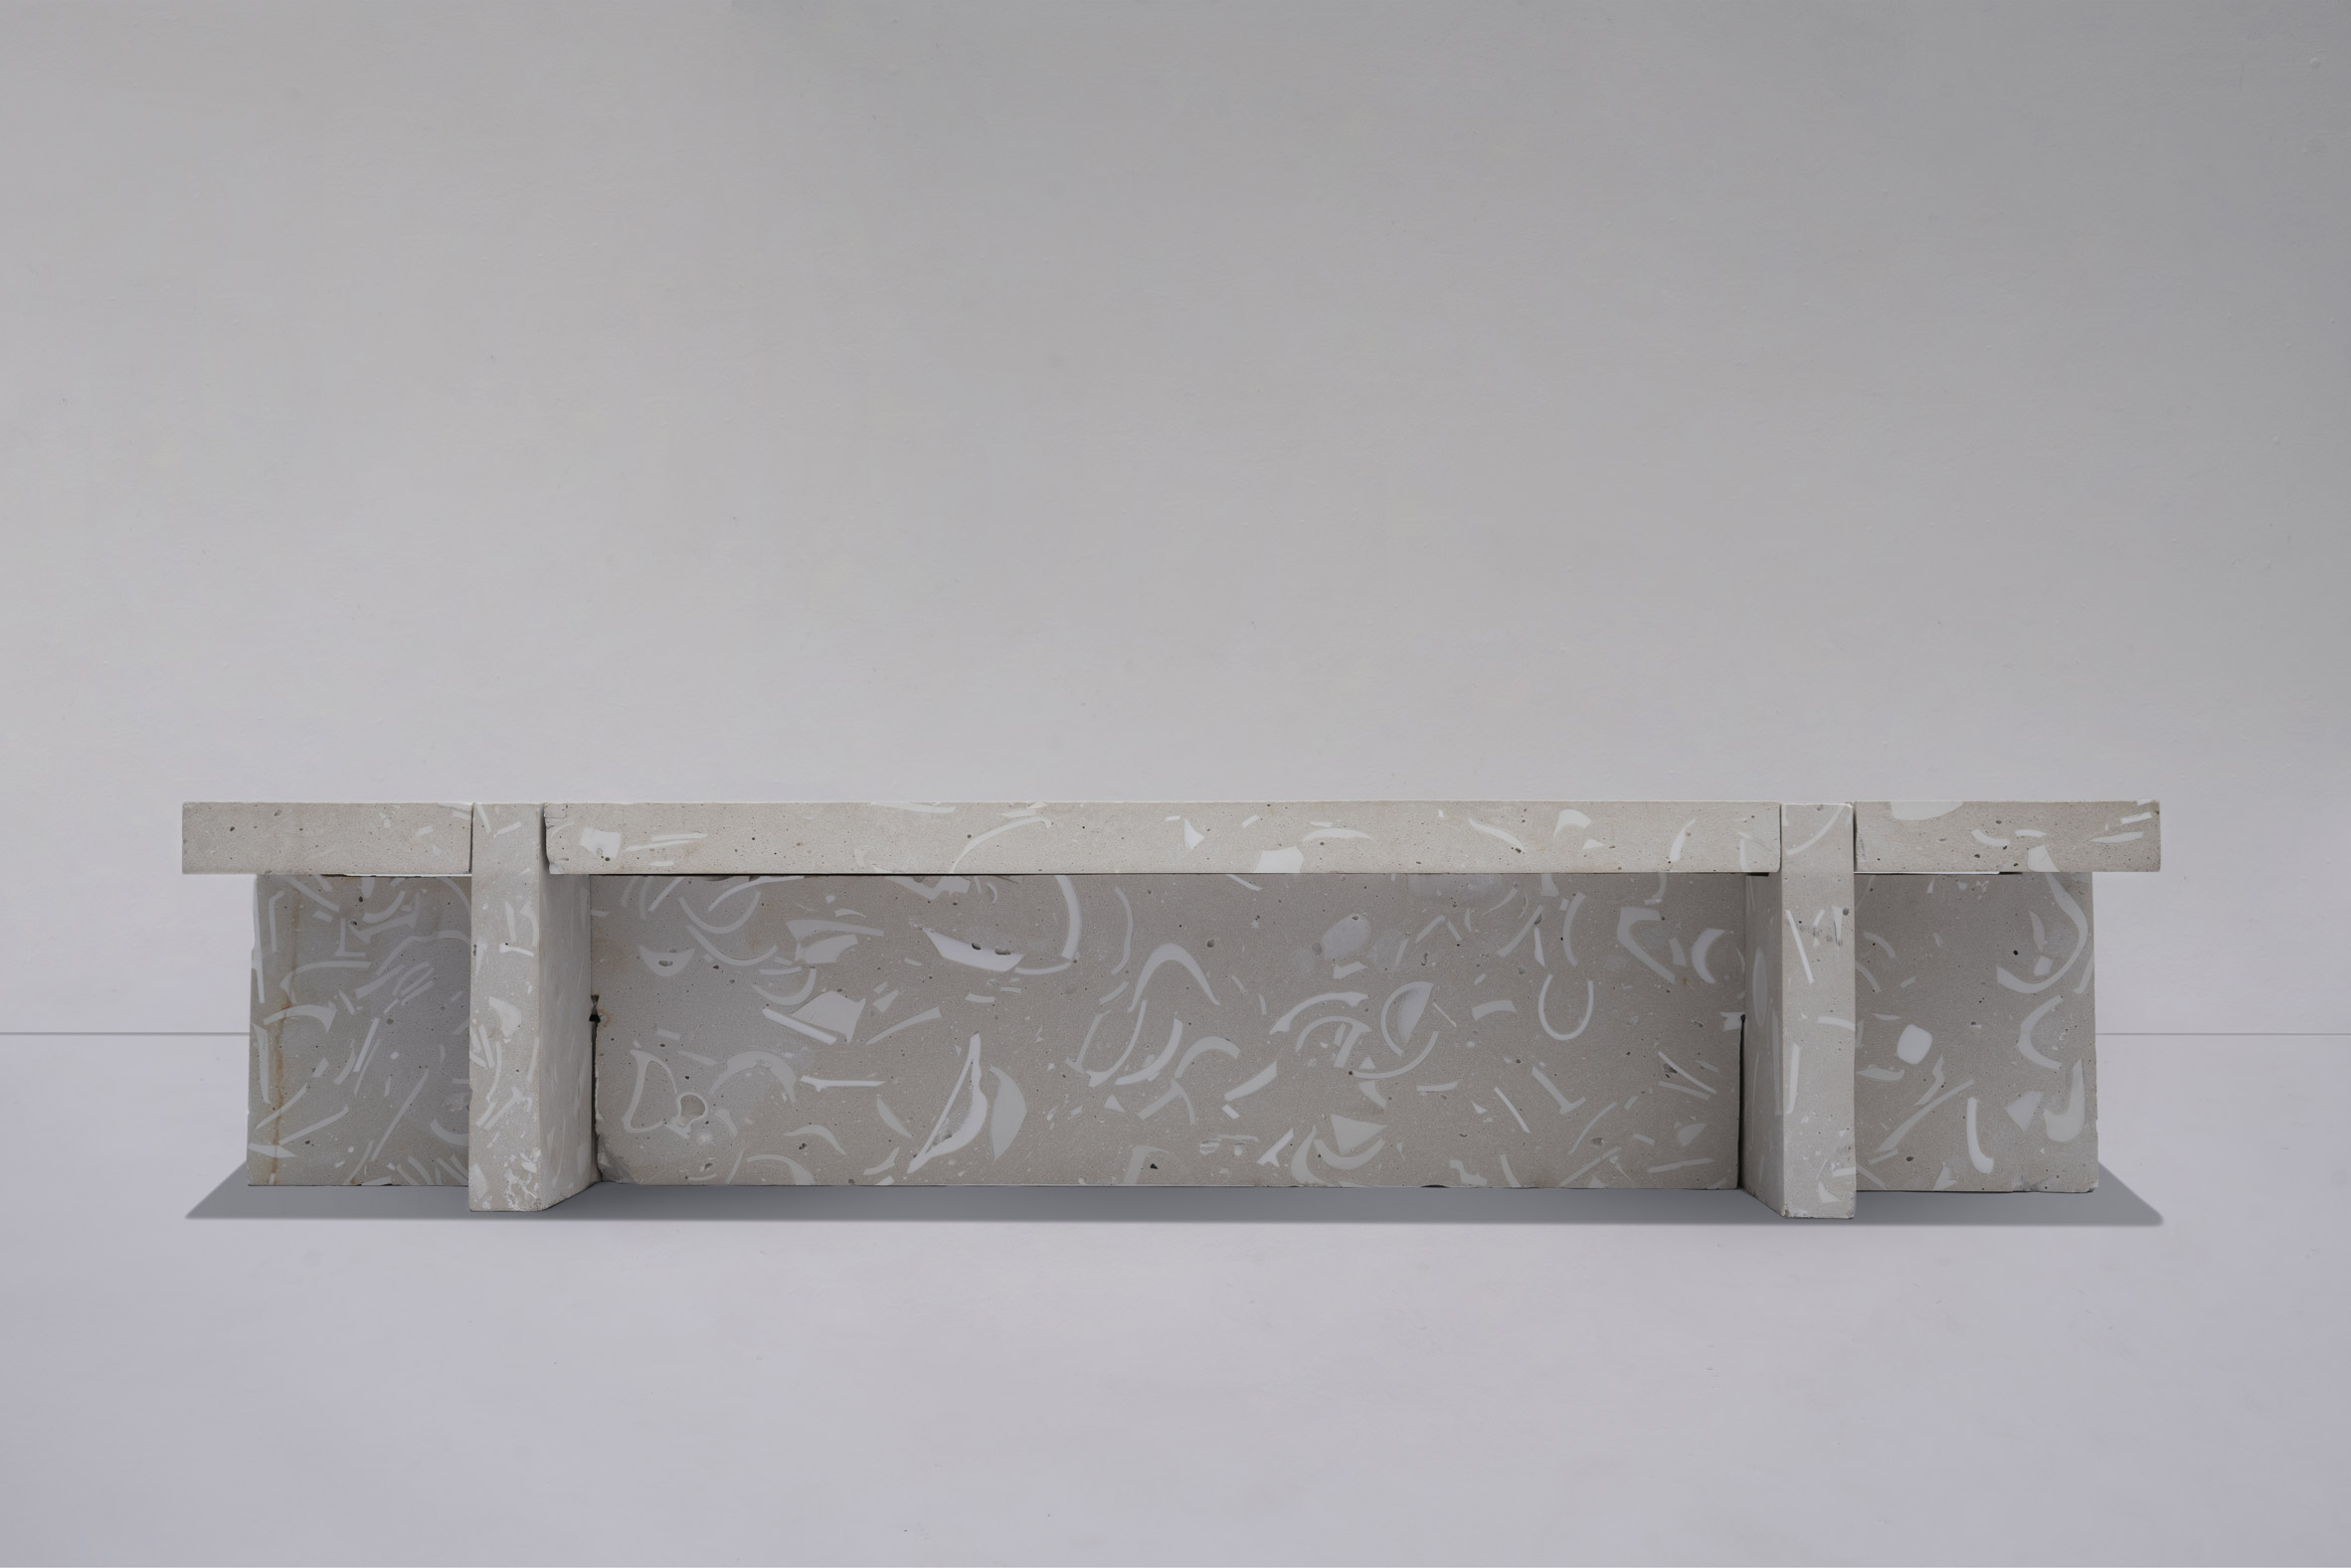 Bentu Design creates Wreck furniture from ceramic waste